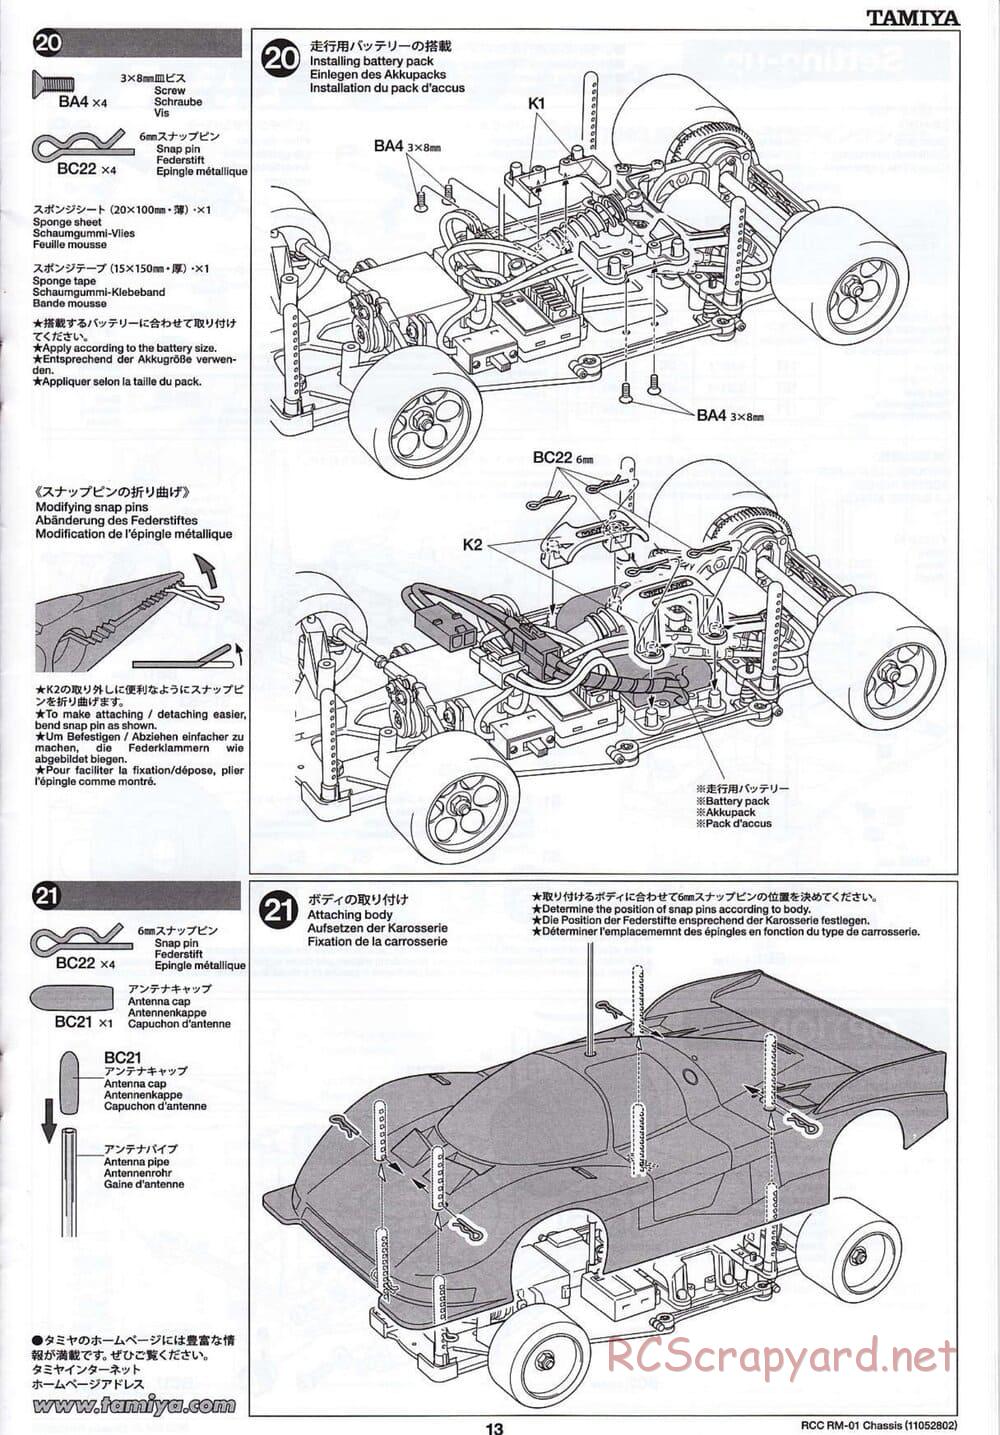 Tamiya - RM-01 Chassis - Manual - Page 13